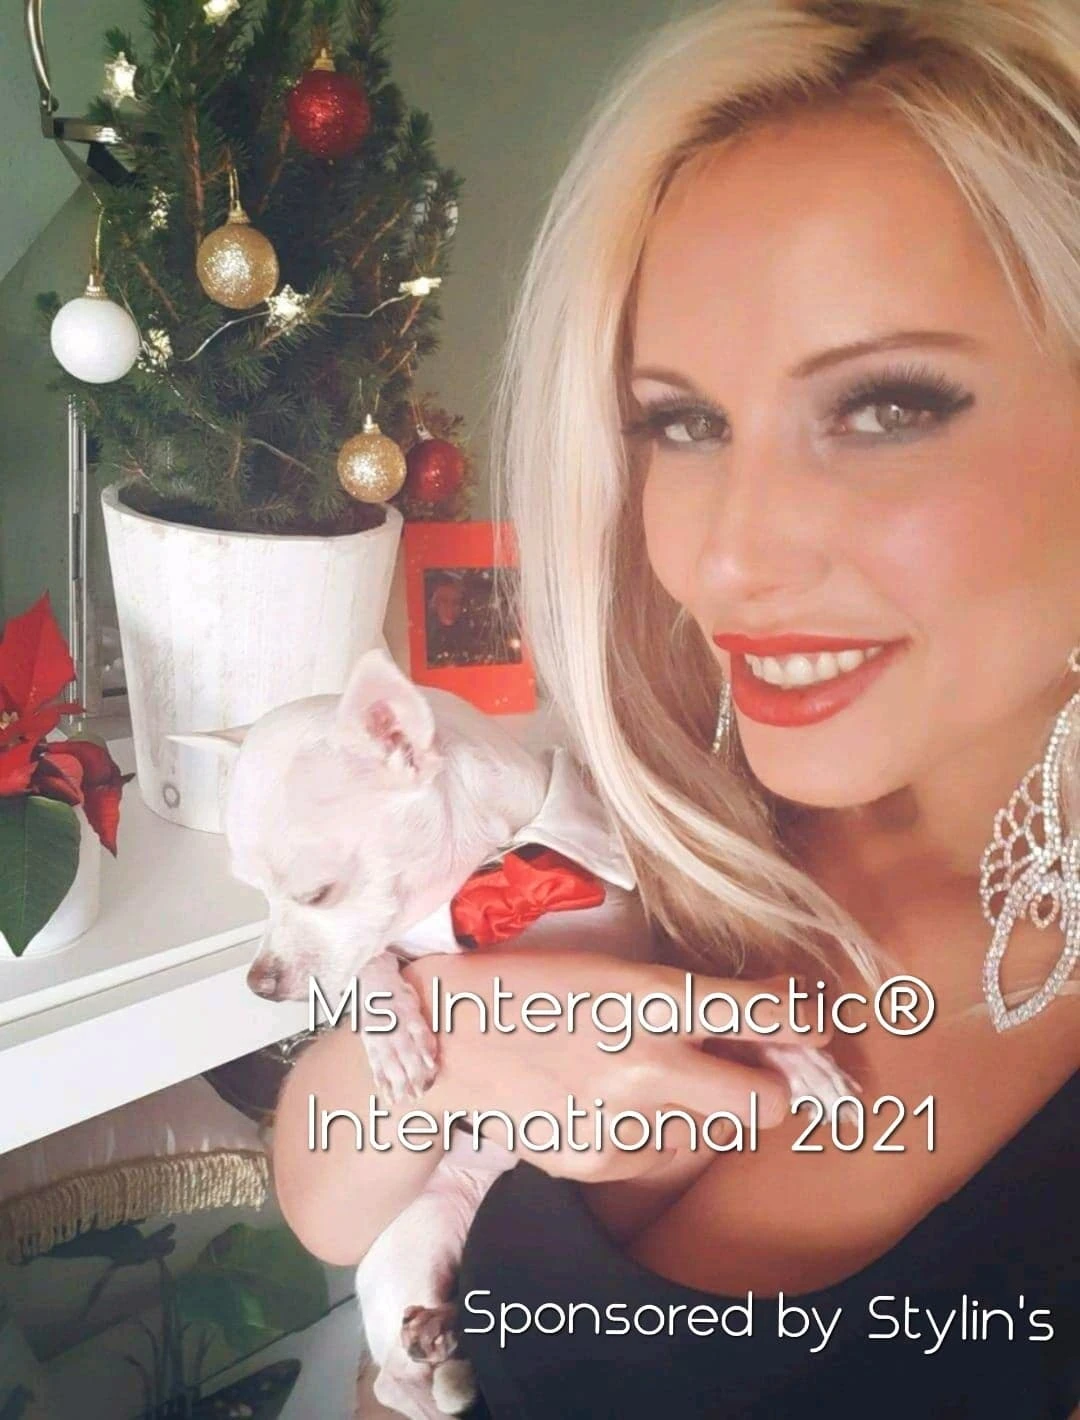 Ms Intergalactic® International 2021